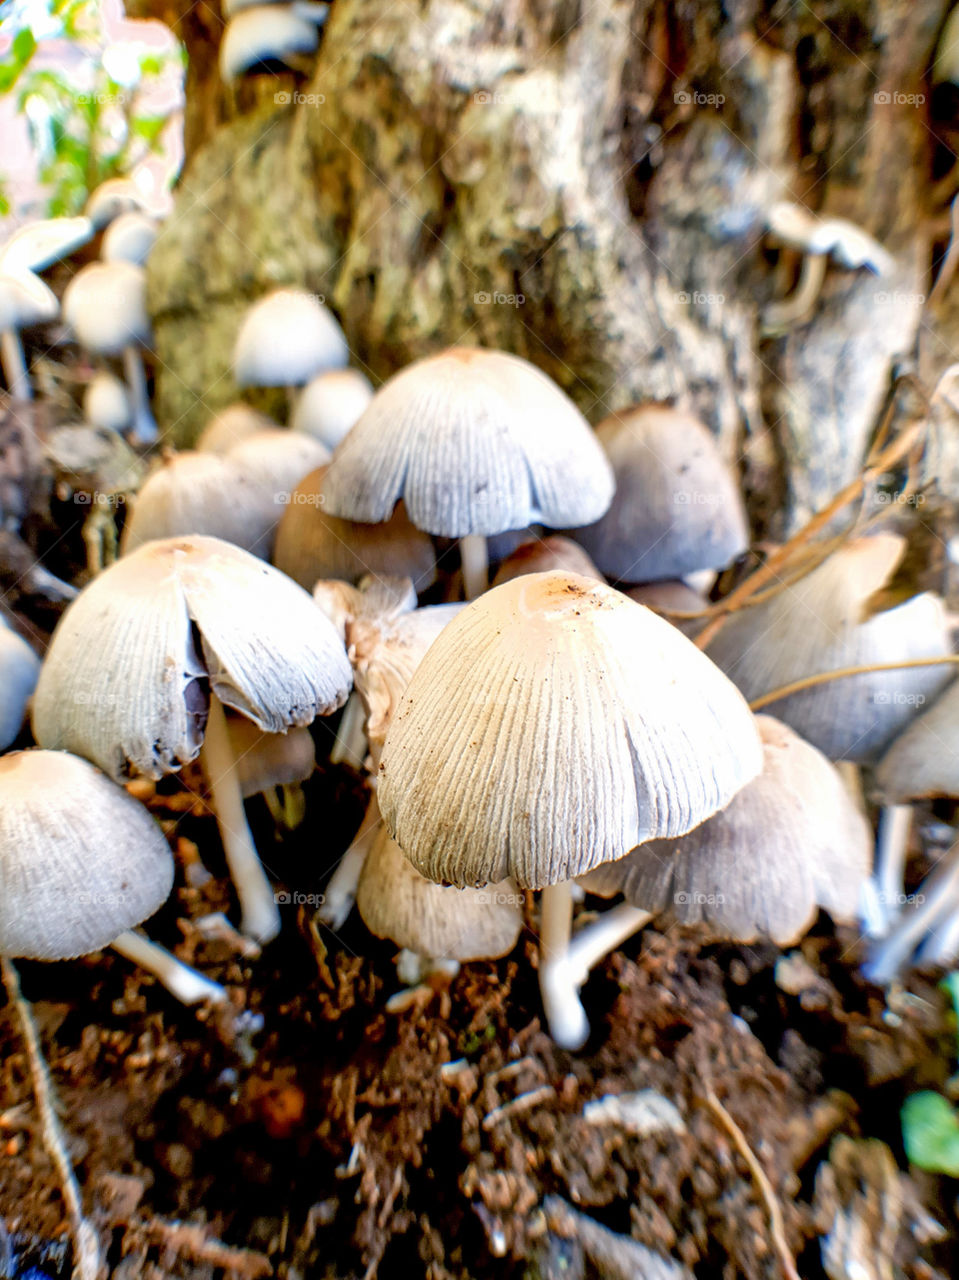 poisonous mushrooms are dangerous if eaten